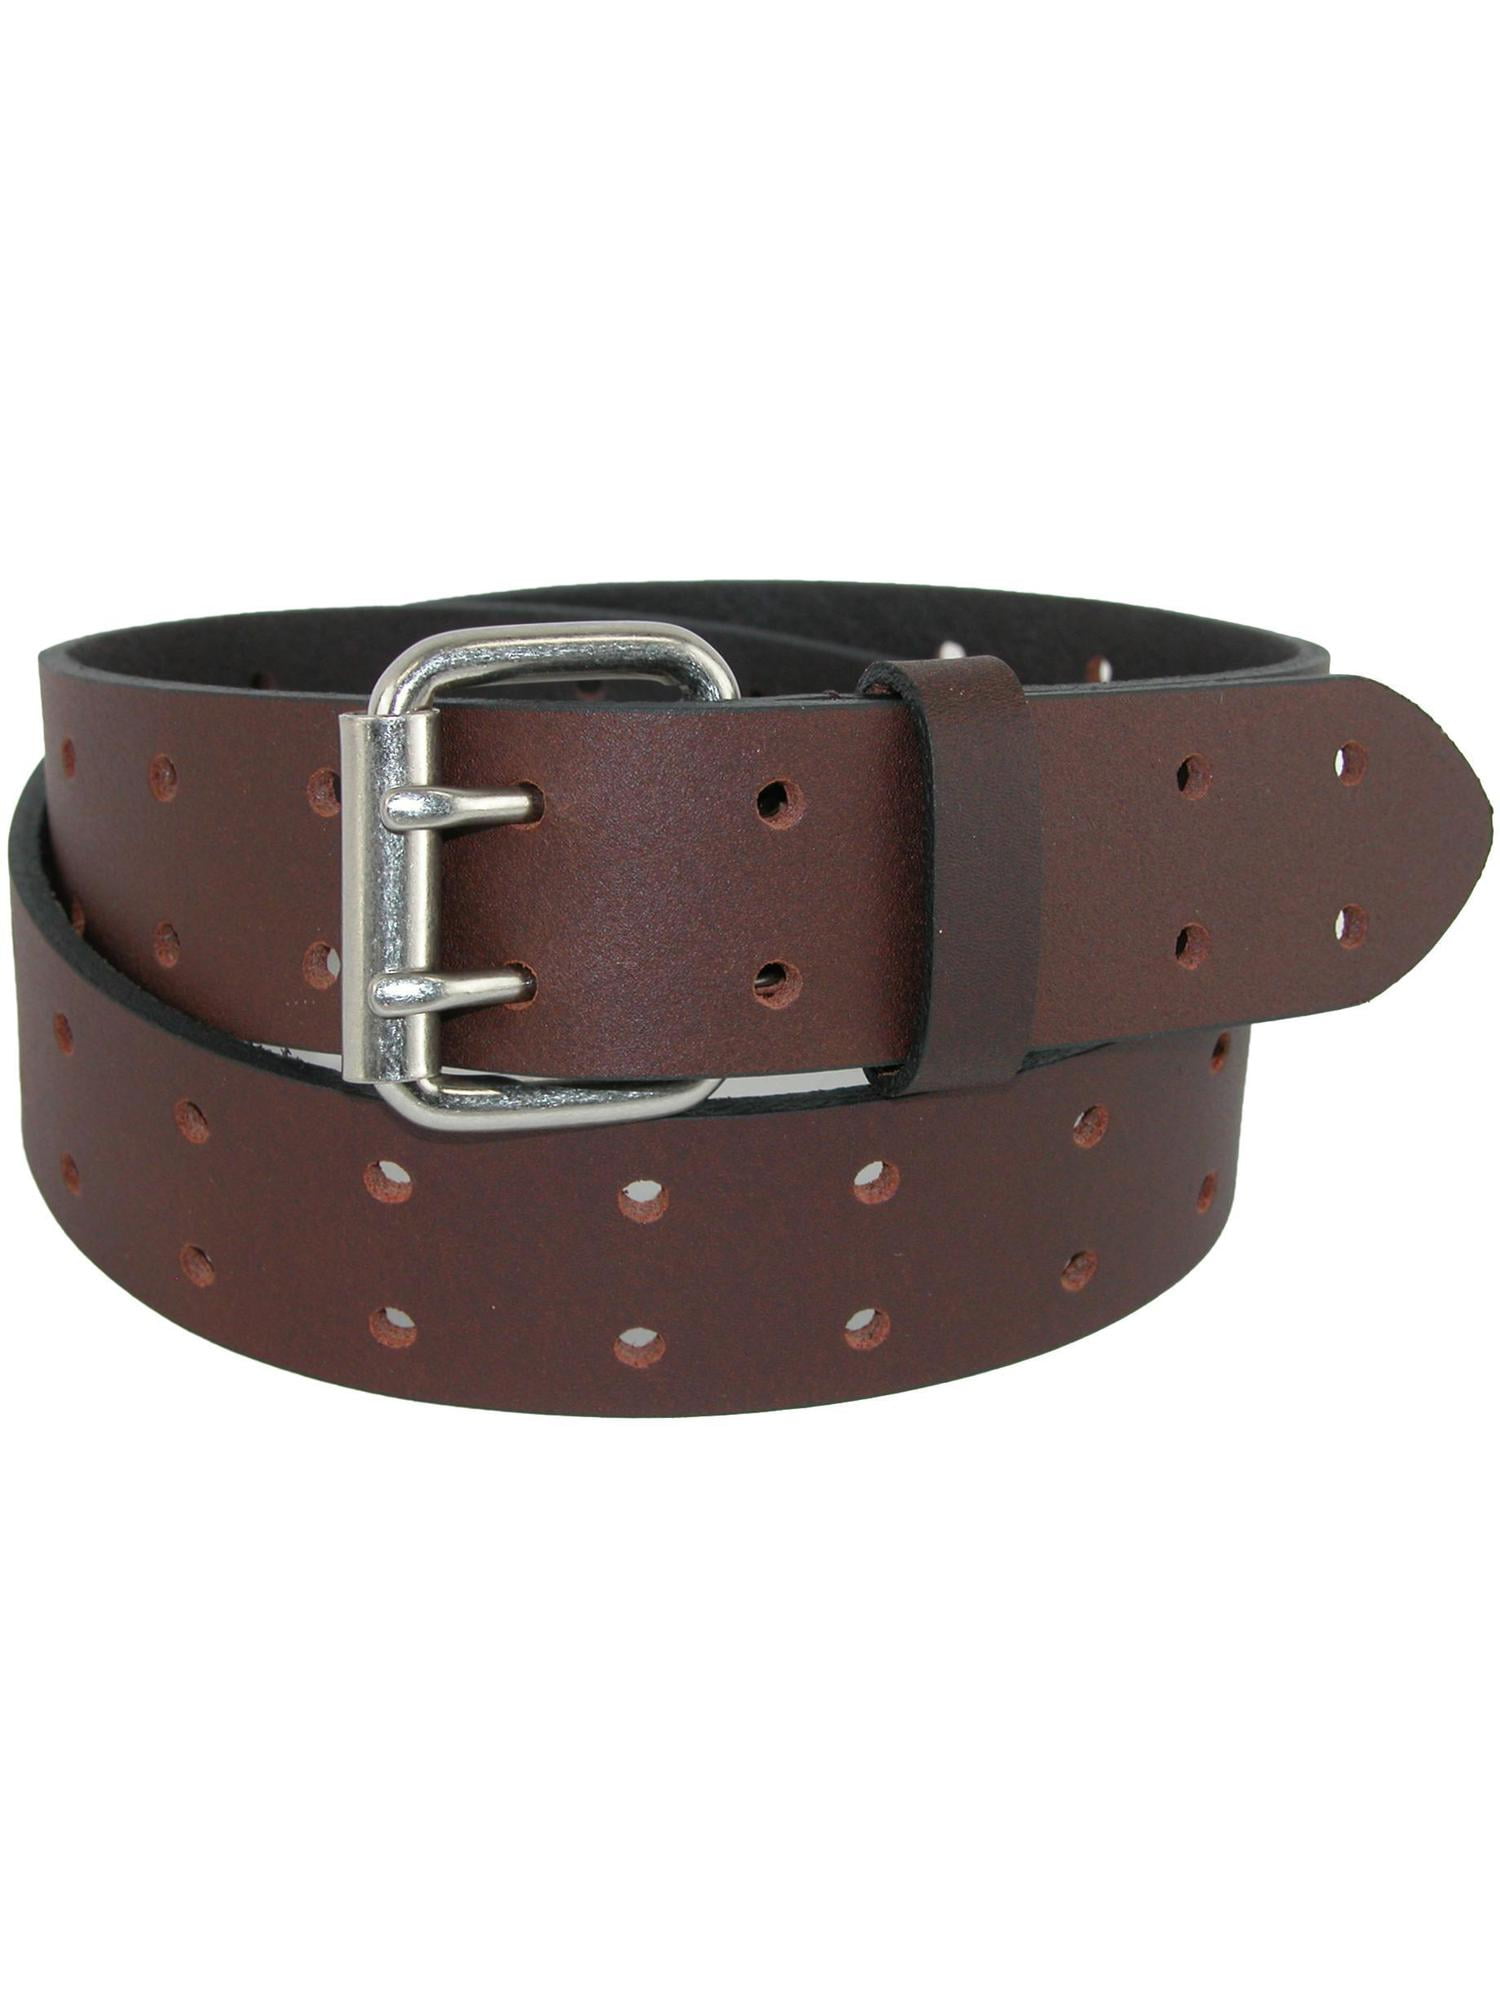 Boston Leather Explorer Duty Belt 2.25 Inches Size 38 Plain 6503-1-38 